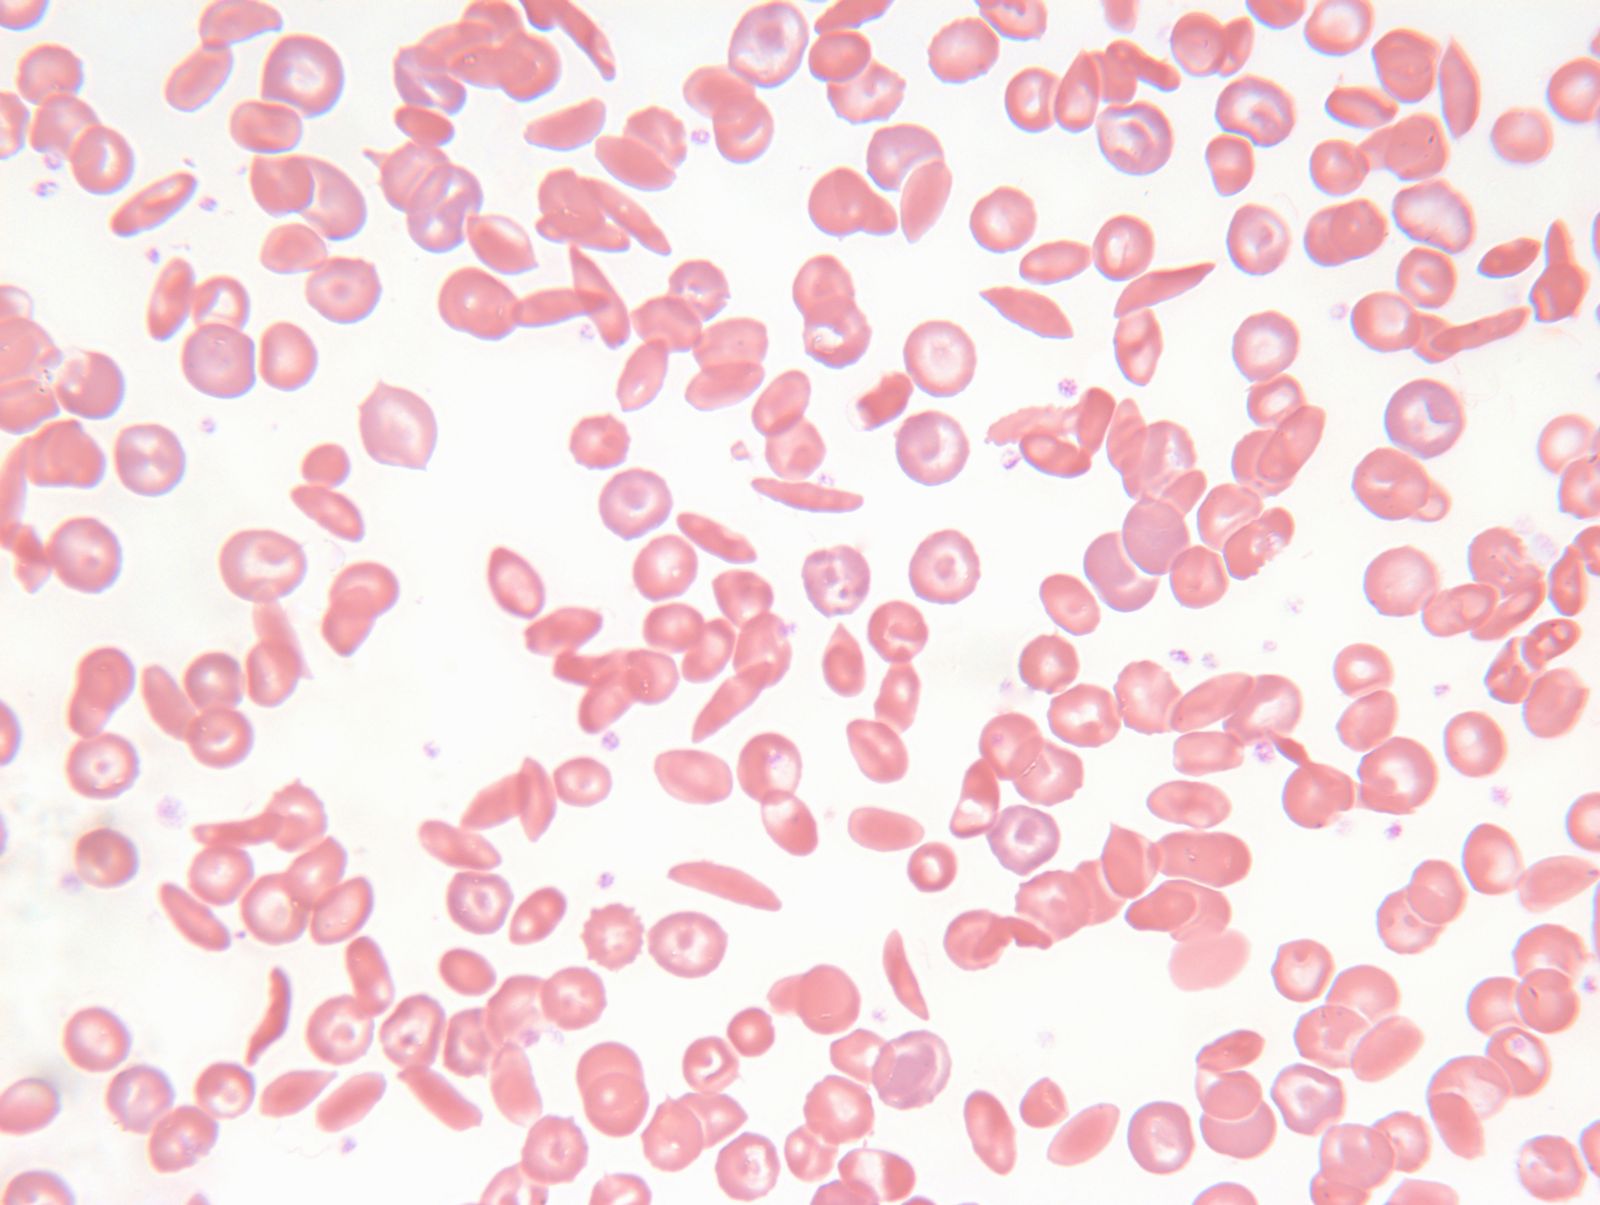 sickle cells